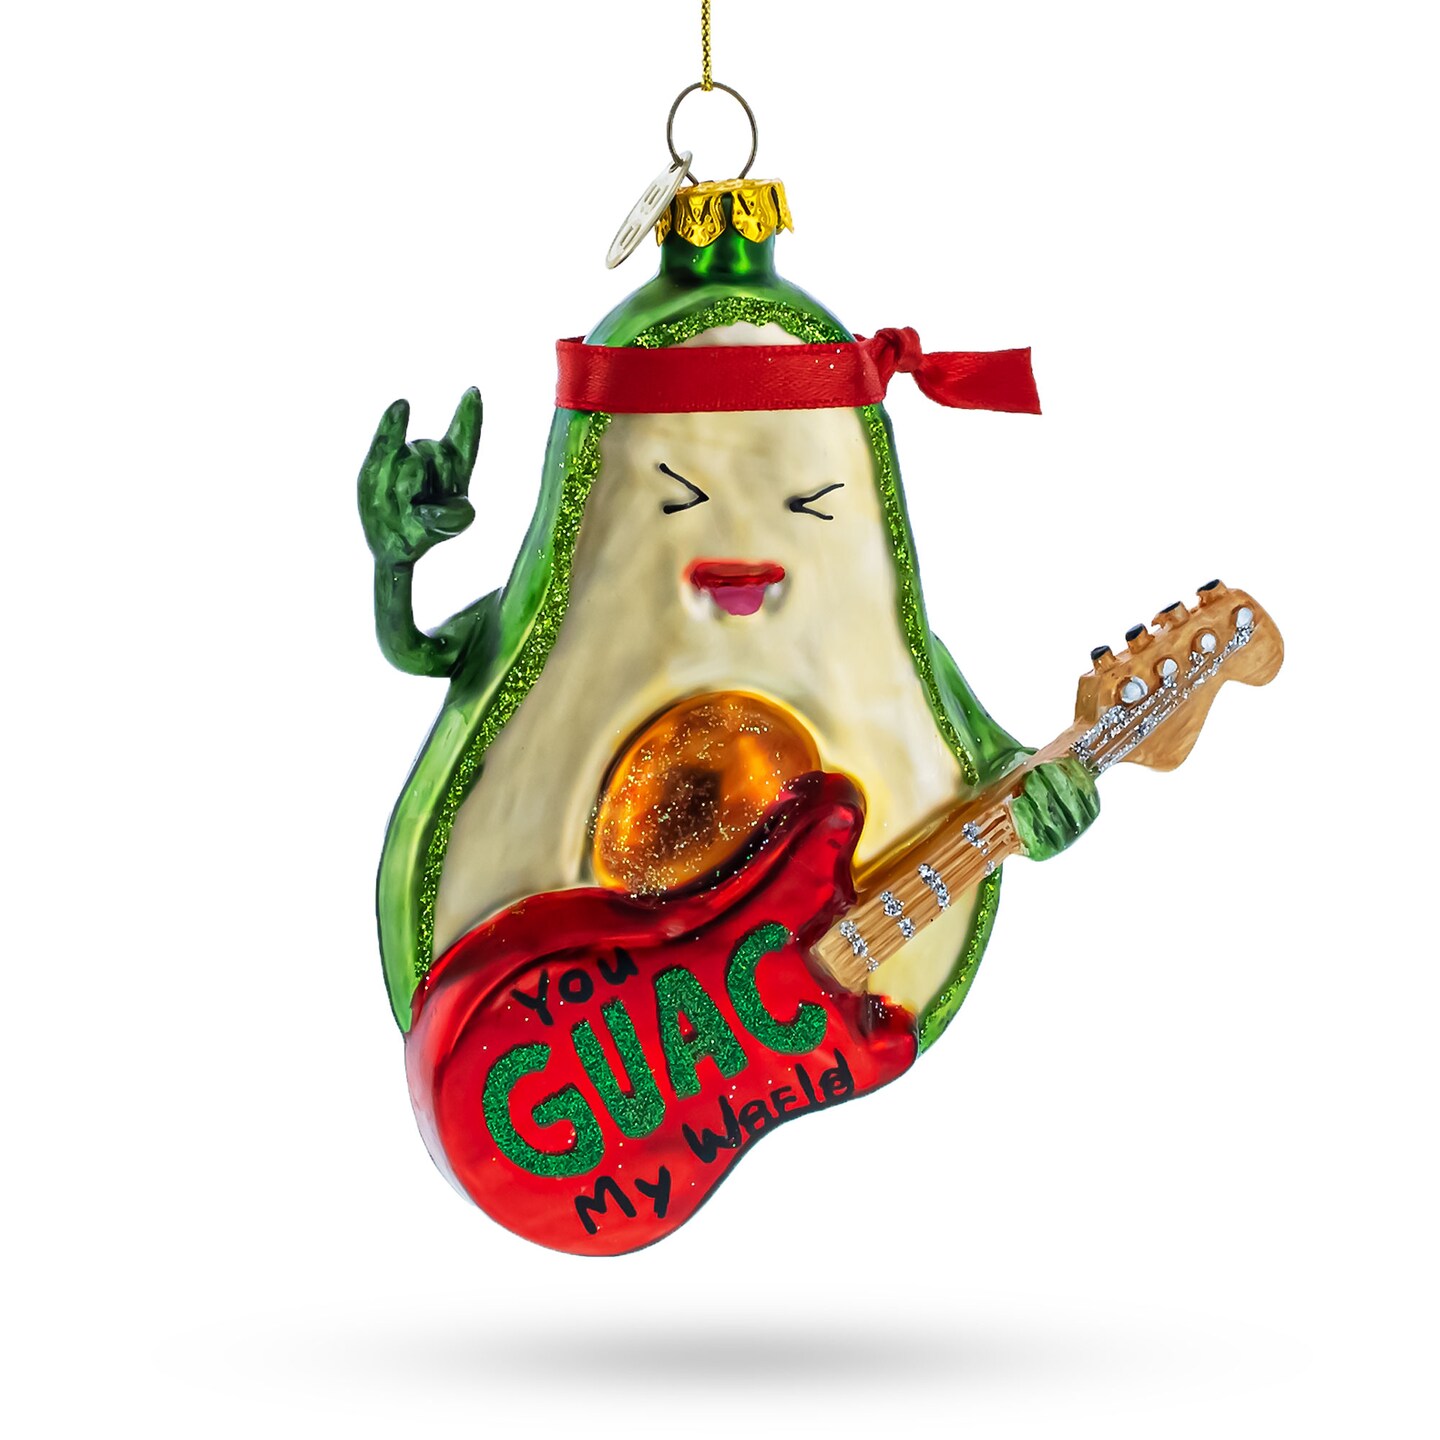 Musical Avocado Strumming a Guitar - Blown Glass Christmas Ornament